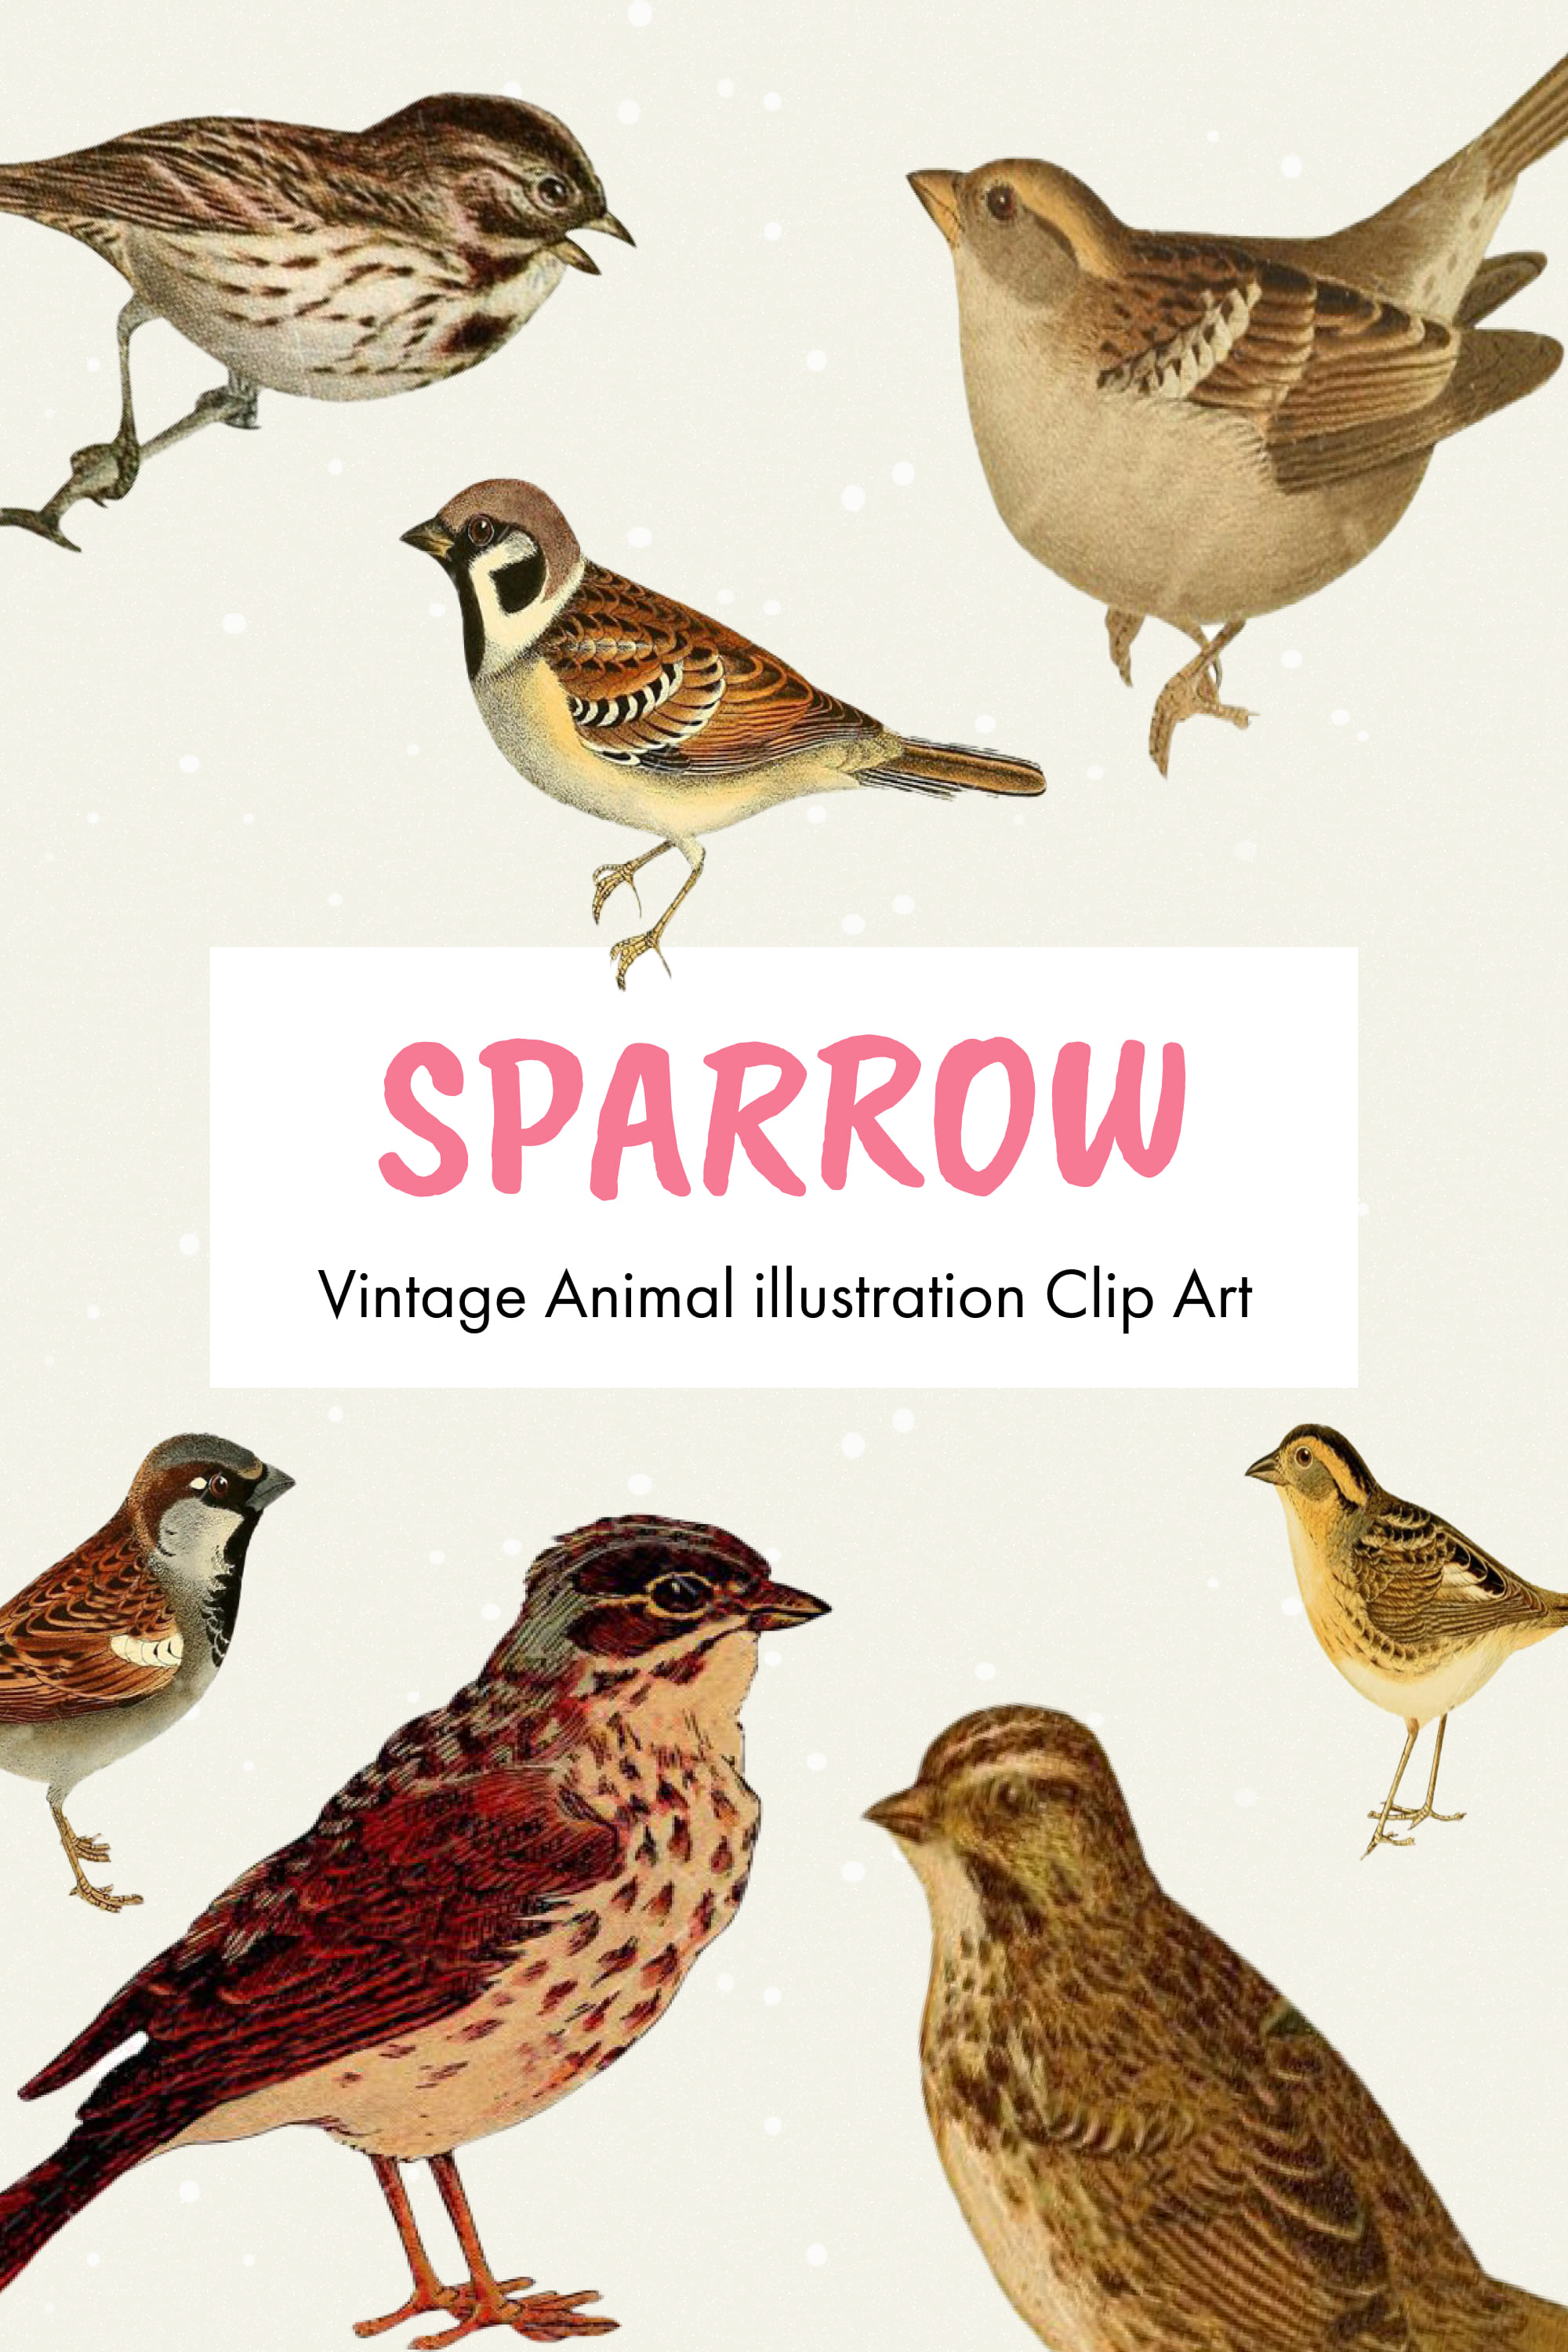 Sparrow vintage animal illustration clip art - pinterest image preview.